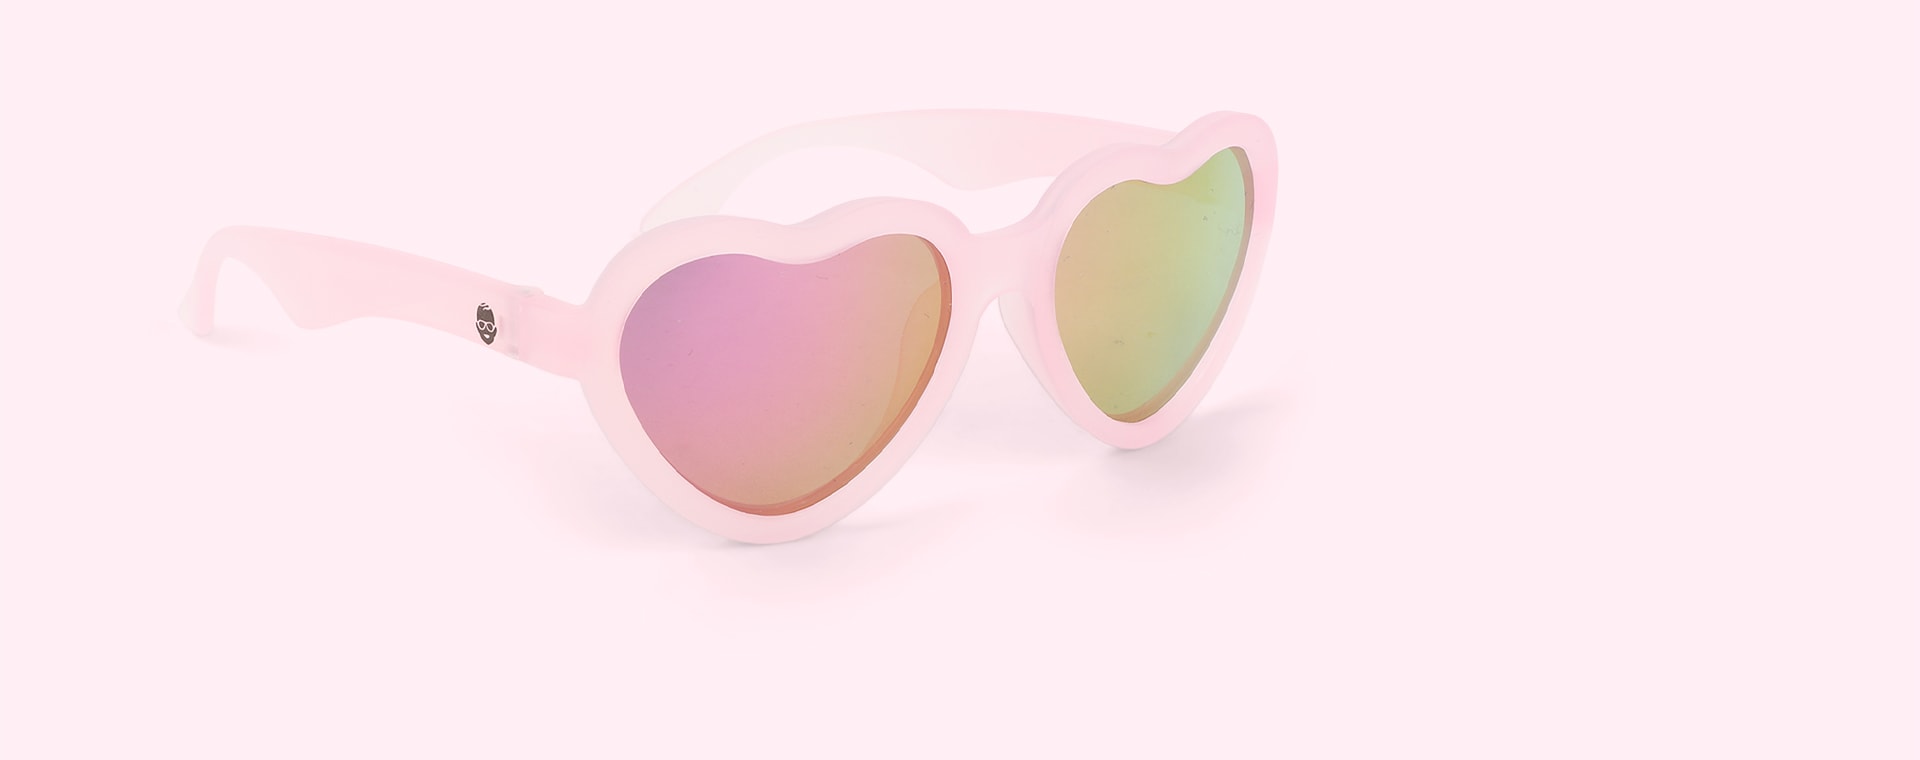 The Influencer Babiators Blue Series Heart Sunglasses